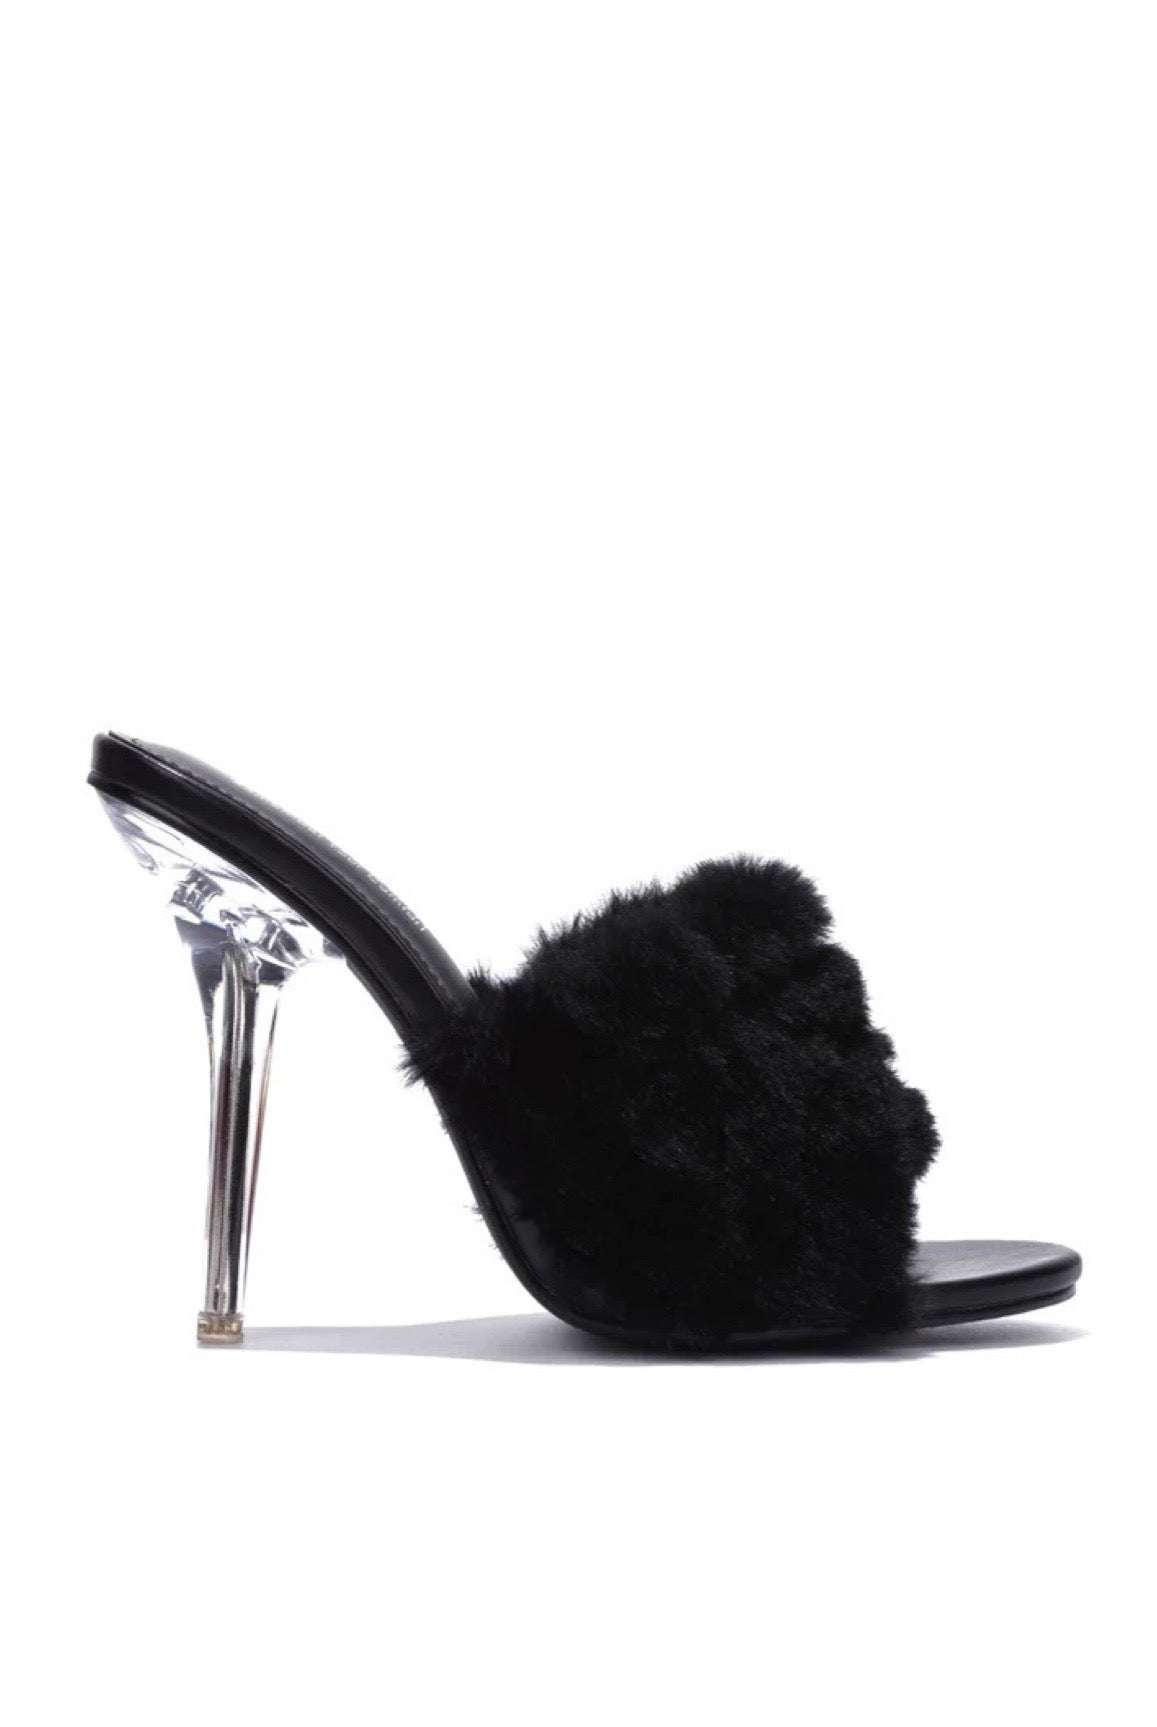 Obrey.....Fur Detail Clear High Heels Cape Robbin Shoes